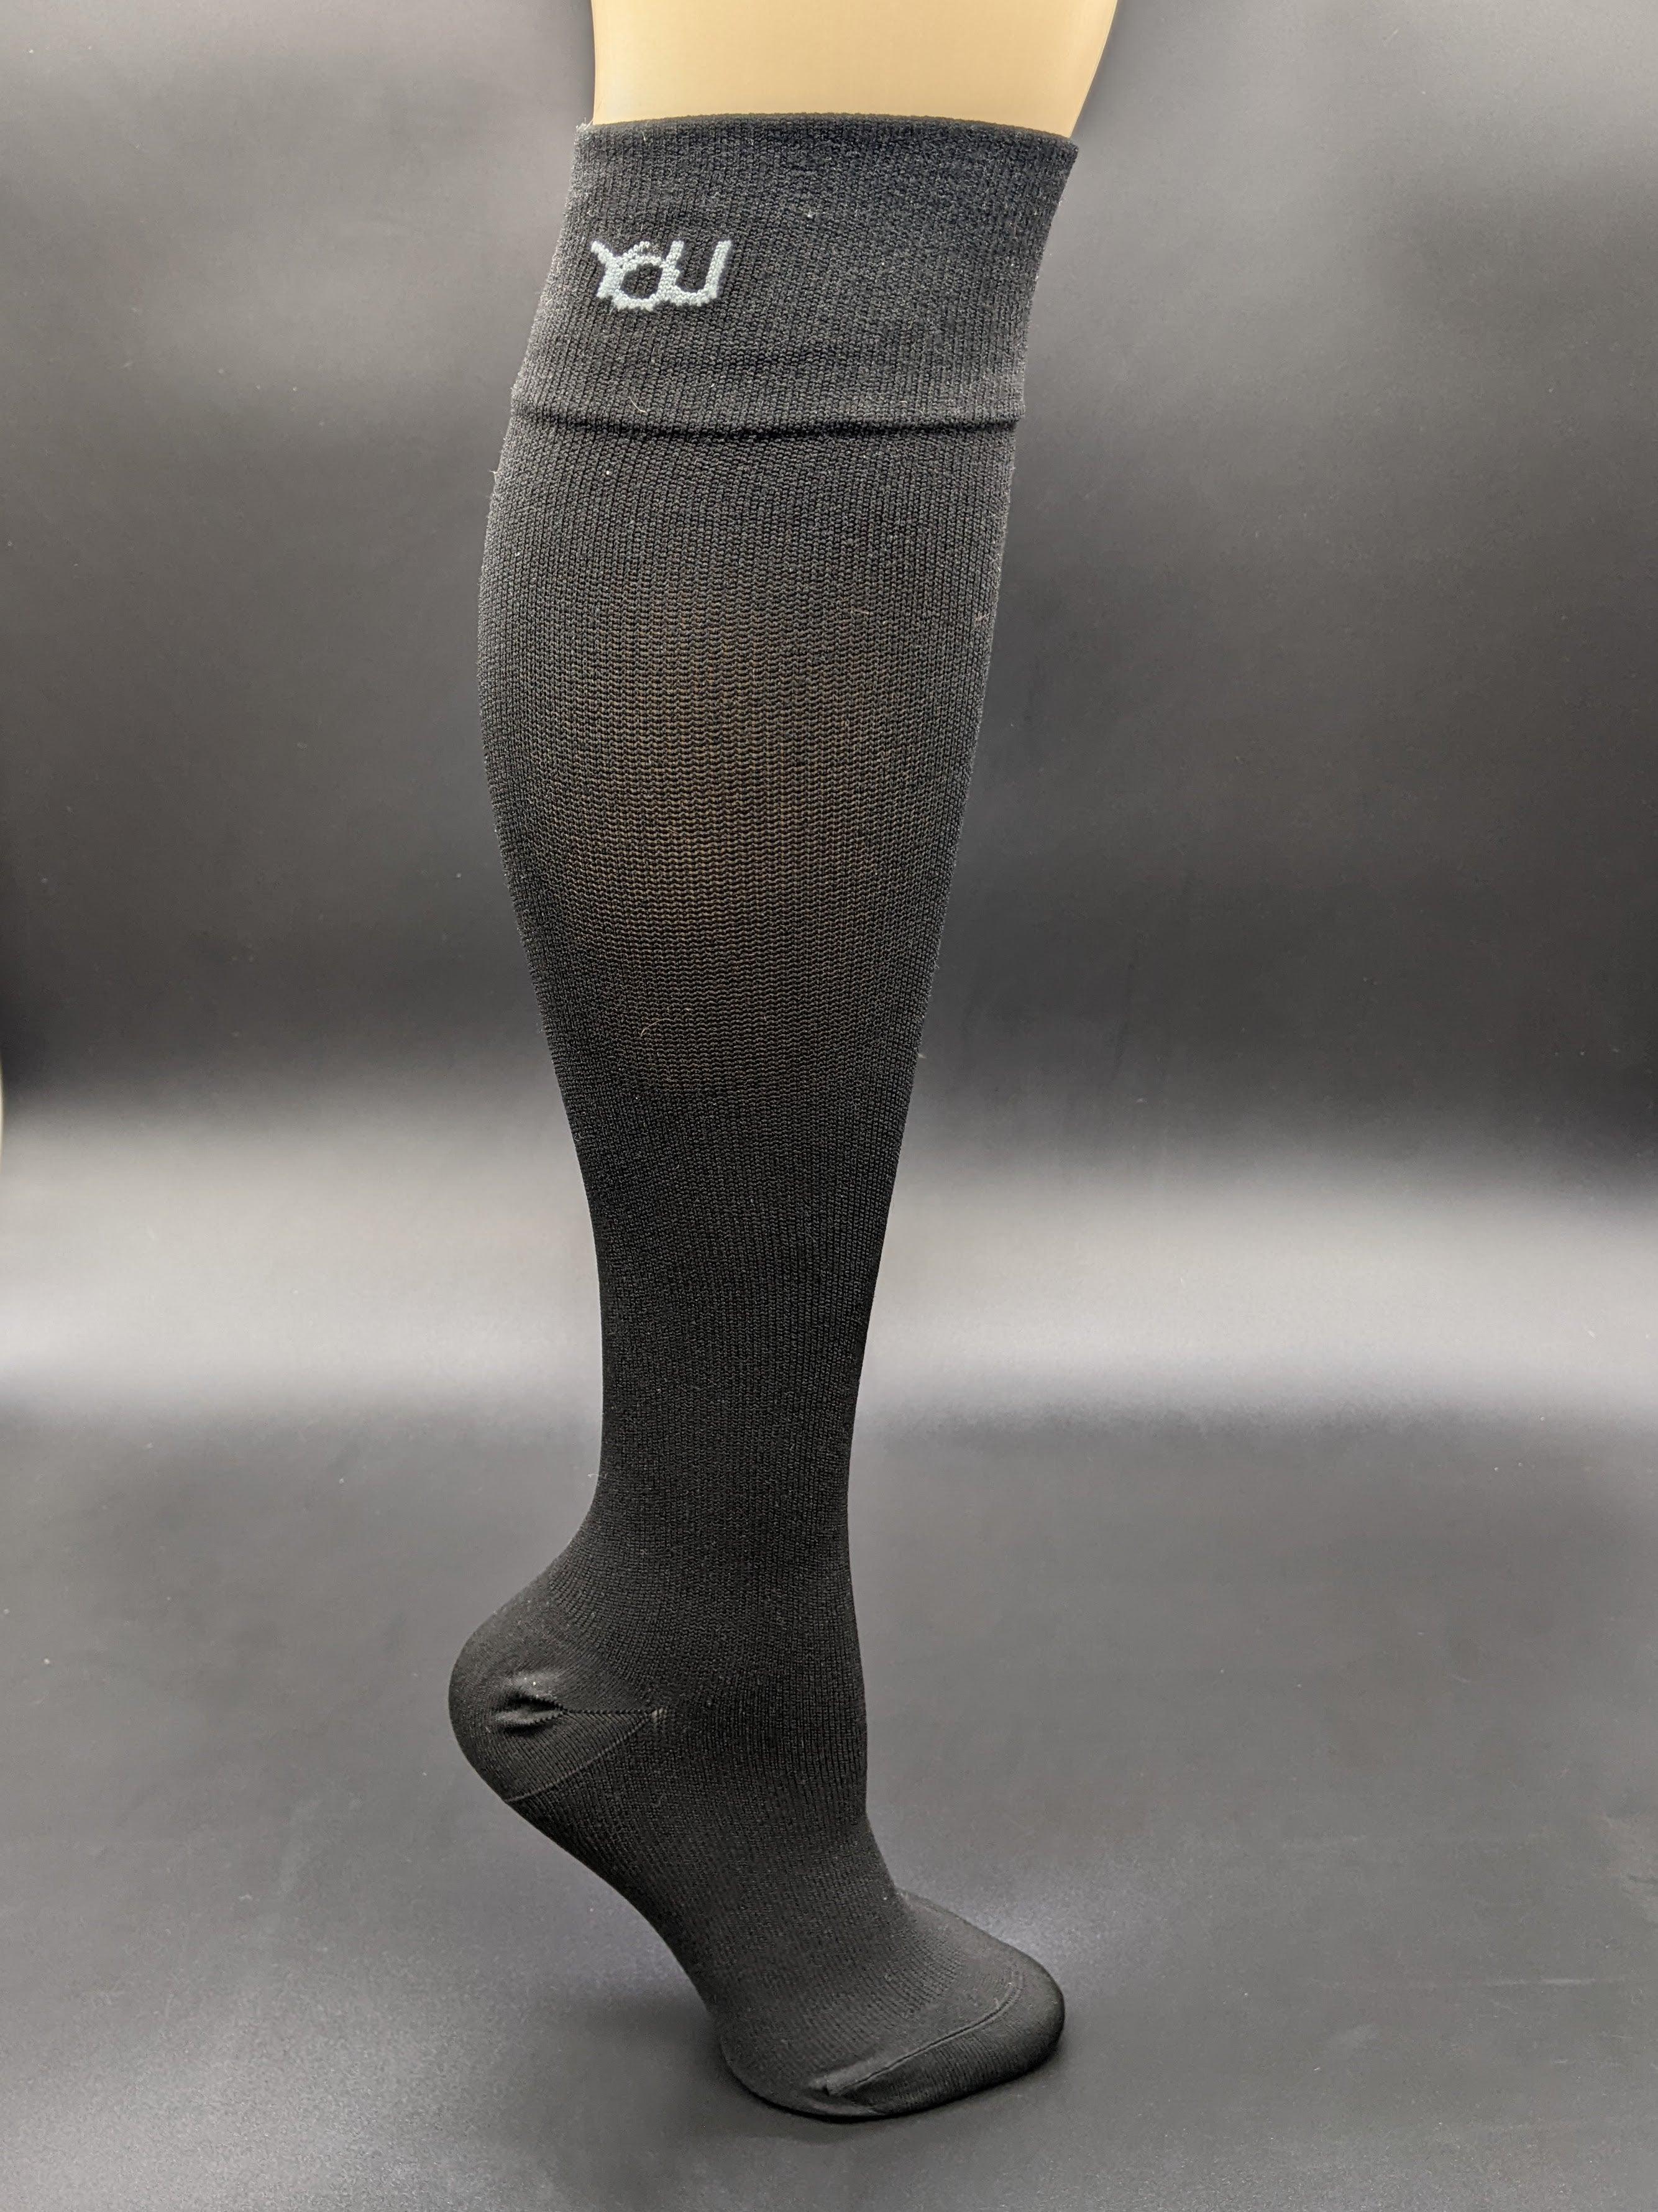 Medium Compression Socks 15-20 mmHg - Knee High - 761K99-SB Medium Compression Socks 15-20 mmHg - Knee High - undefined by Supply Physical Therapy 15-20 mmhg, Compression socks